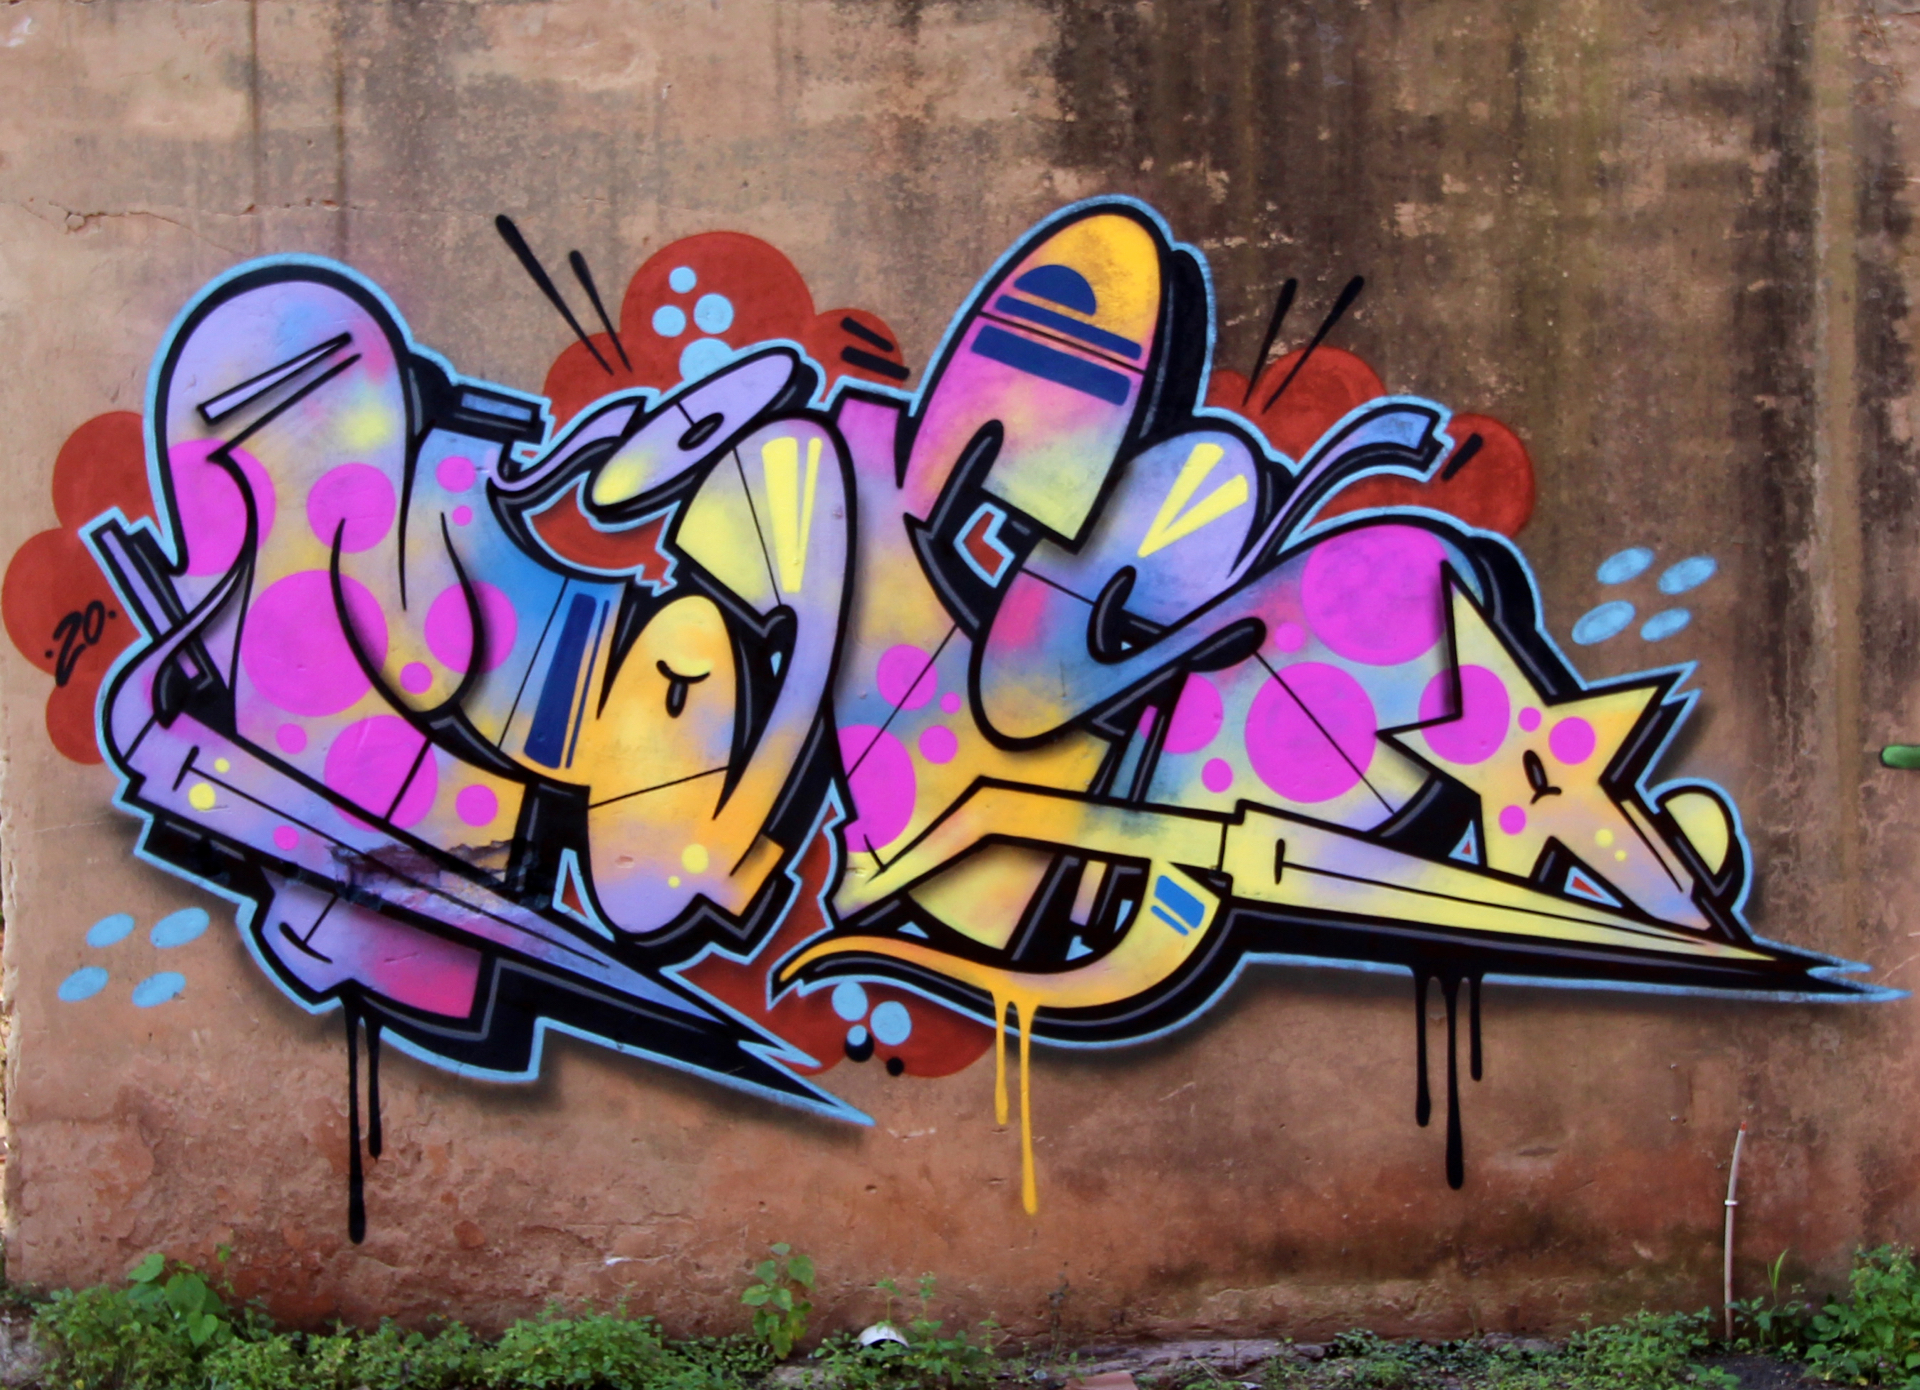 Mars - Artisti Graffiti